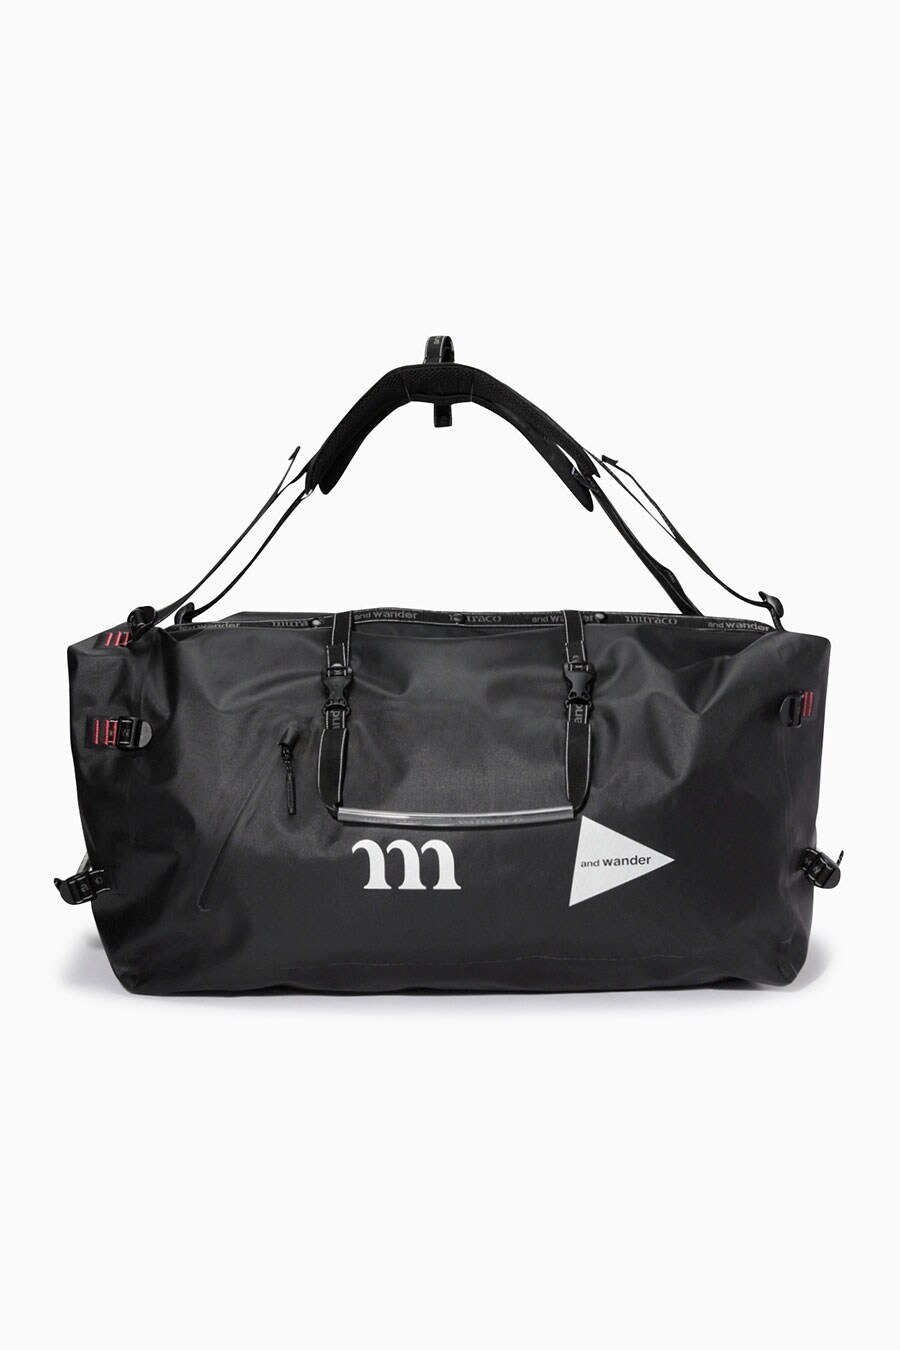 muraco × and wander WATERPROOF BOSTON BAG(Color：black)／35,200円 ※3月下旬入荷予定。